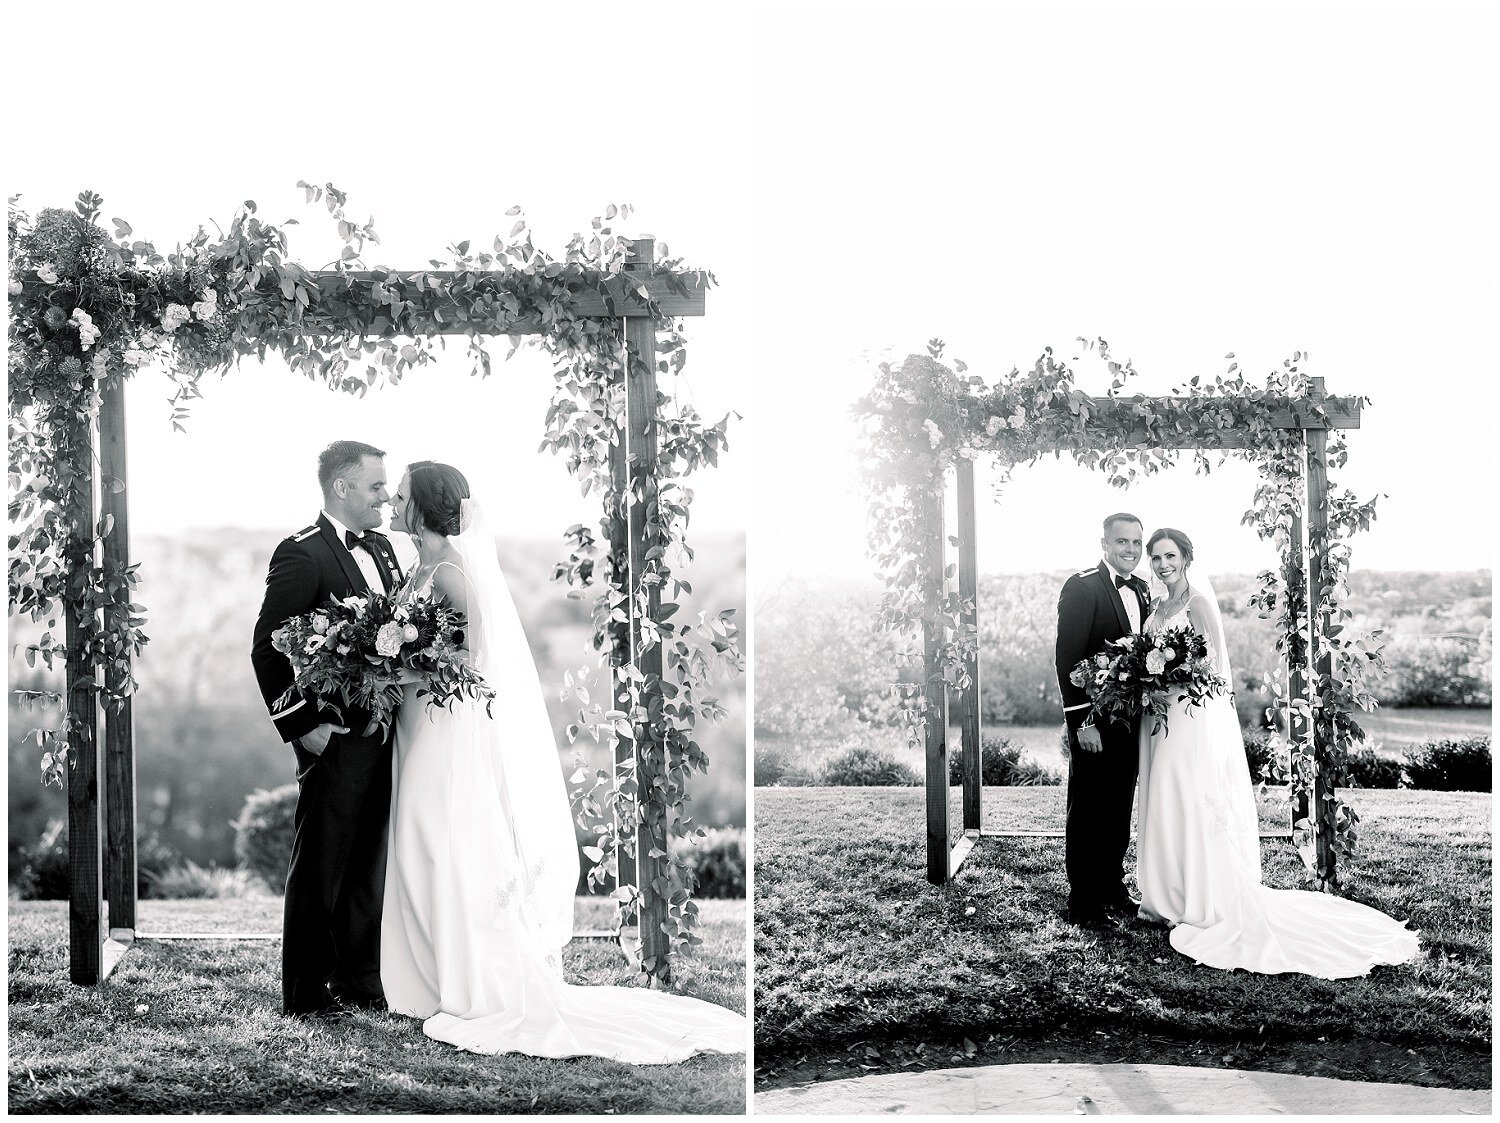 Small-Intimate-Midwestern-Wedding-JandT-10.12.20-Elizabeth-Ladean-Photography-photo-_8504.jpg